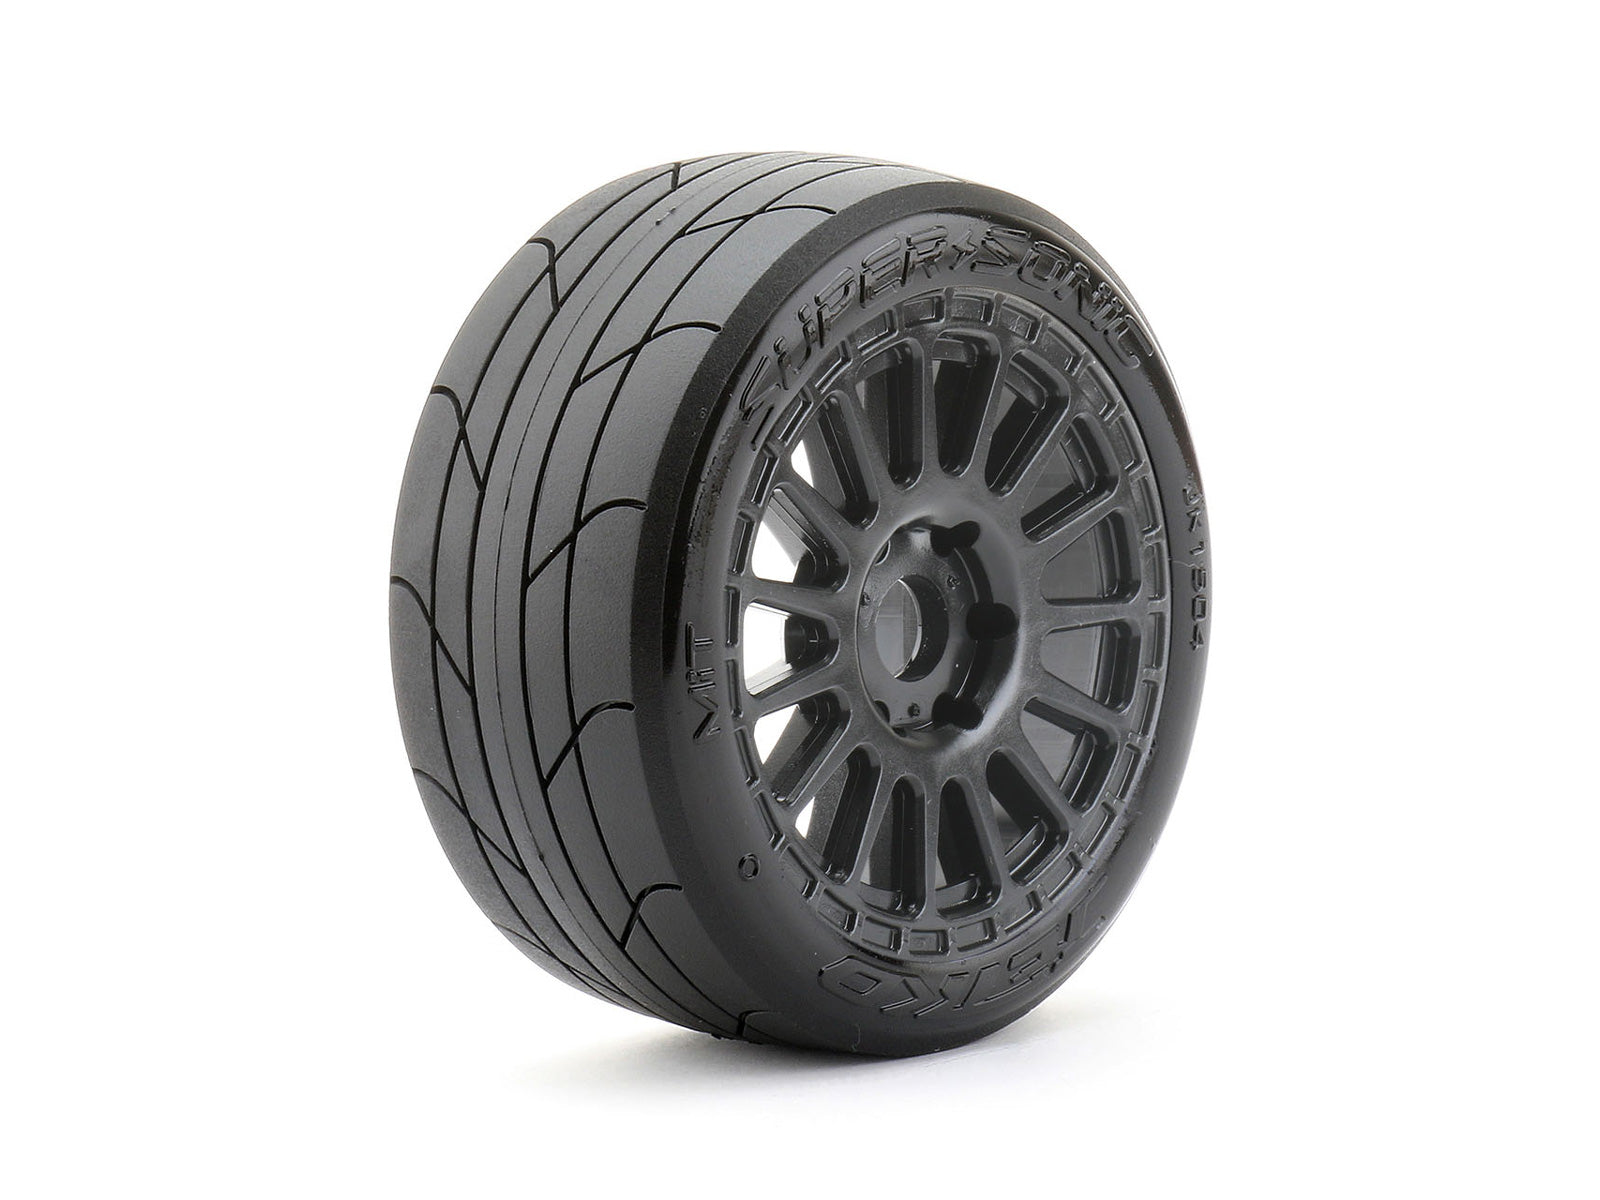 JETKO 1504RBMSGB 1/8 Buggy Super Sonic Tires Mounted on Black Radial Rims, Medium Soft, Belted (2)